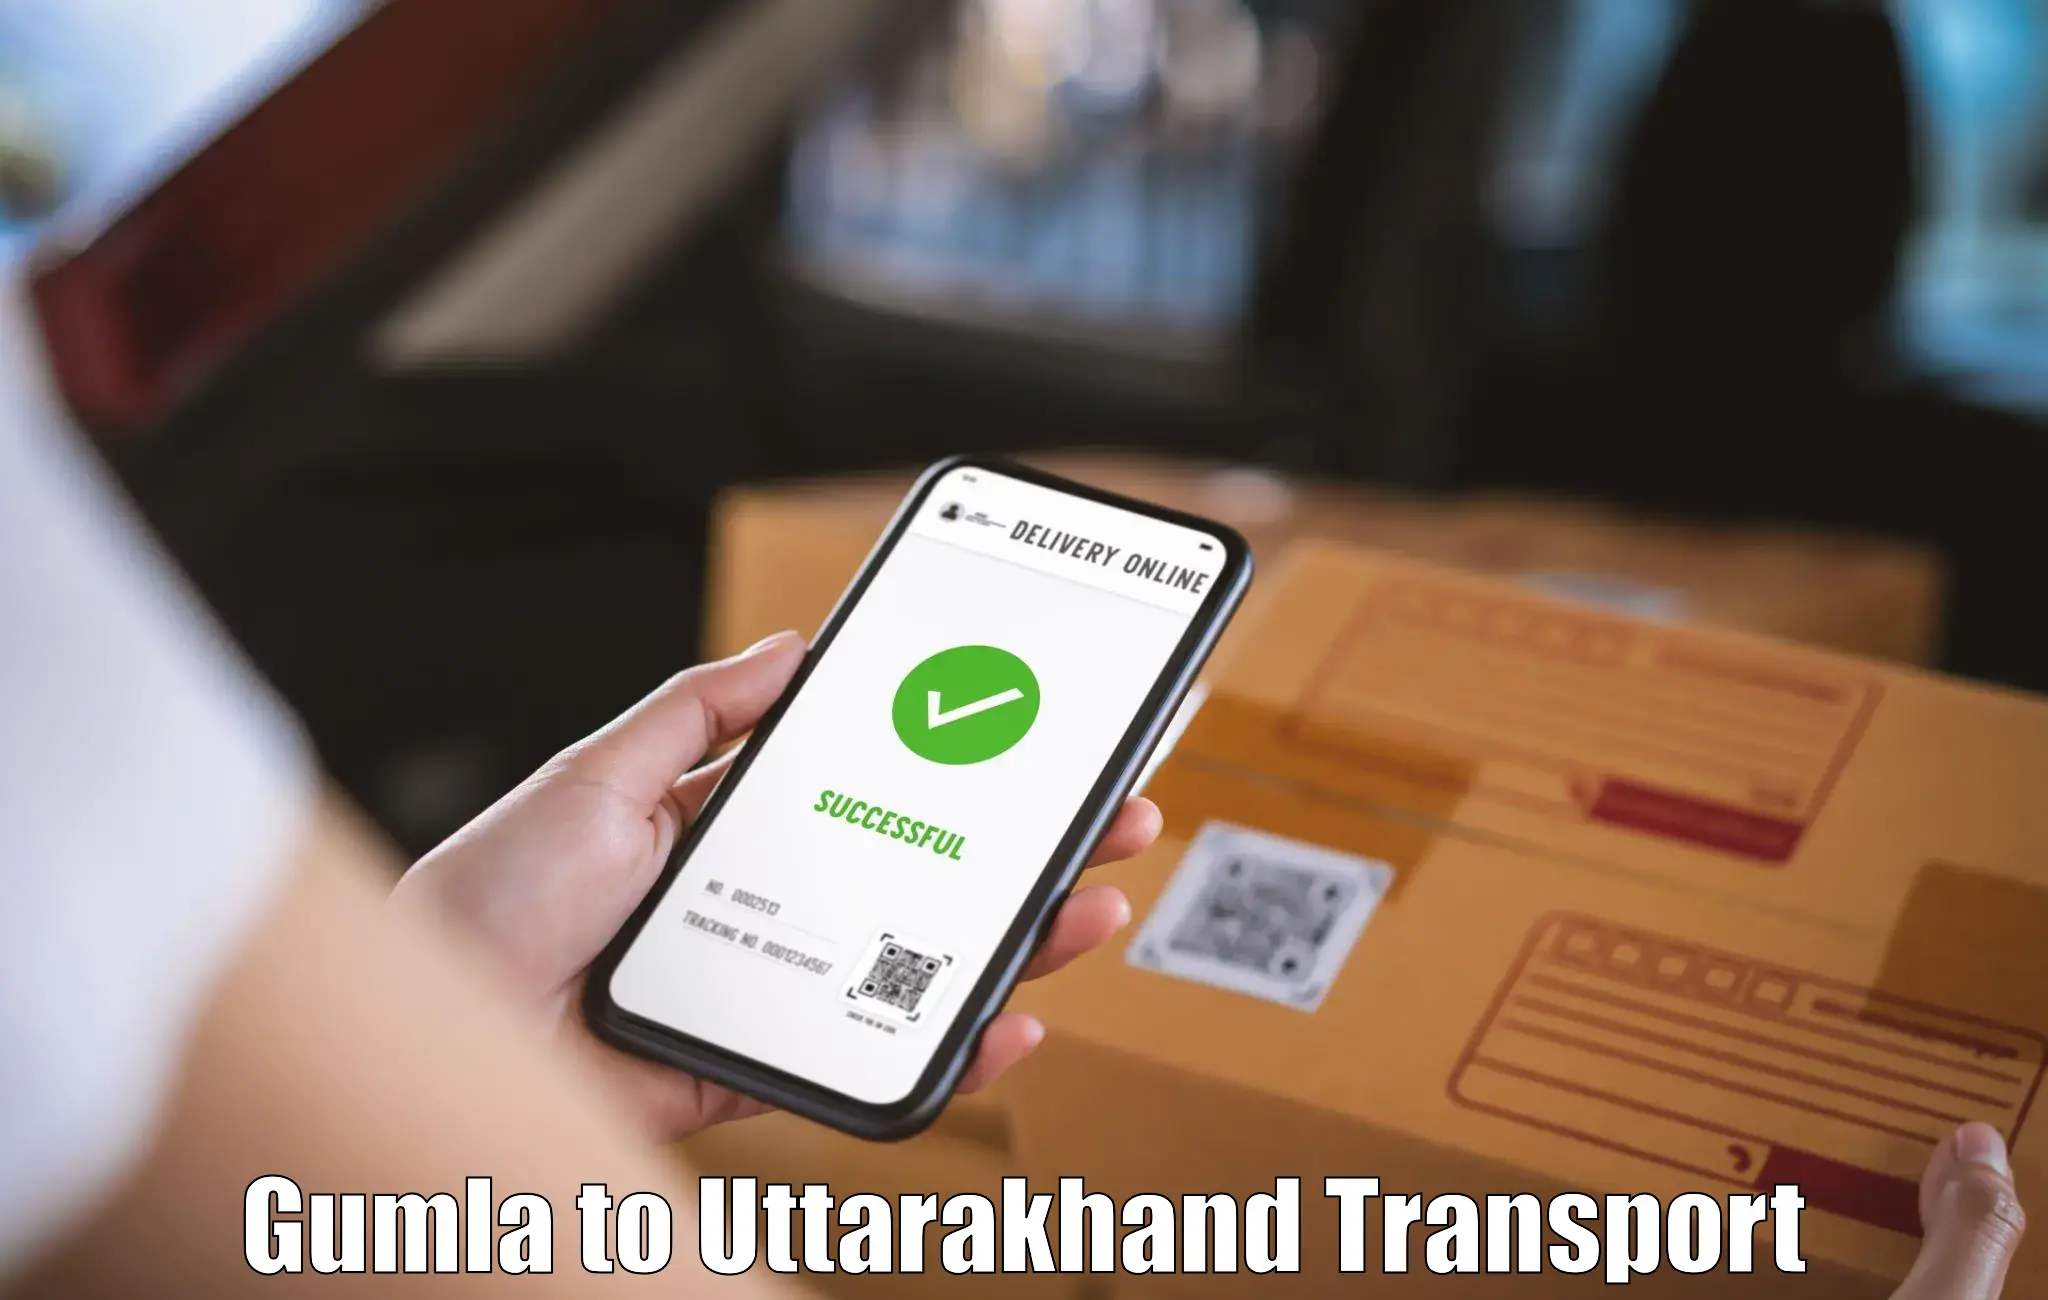 Transport shared services Gumla to IIT Roorkee